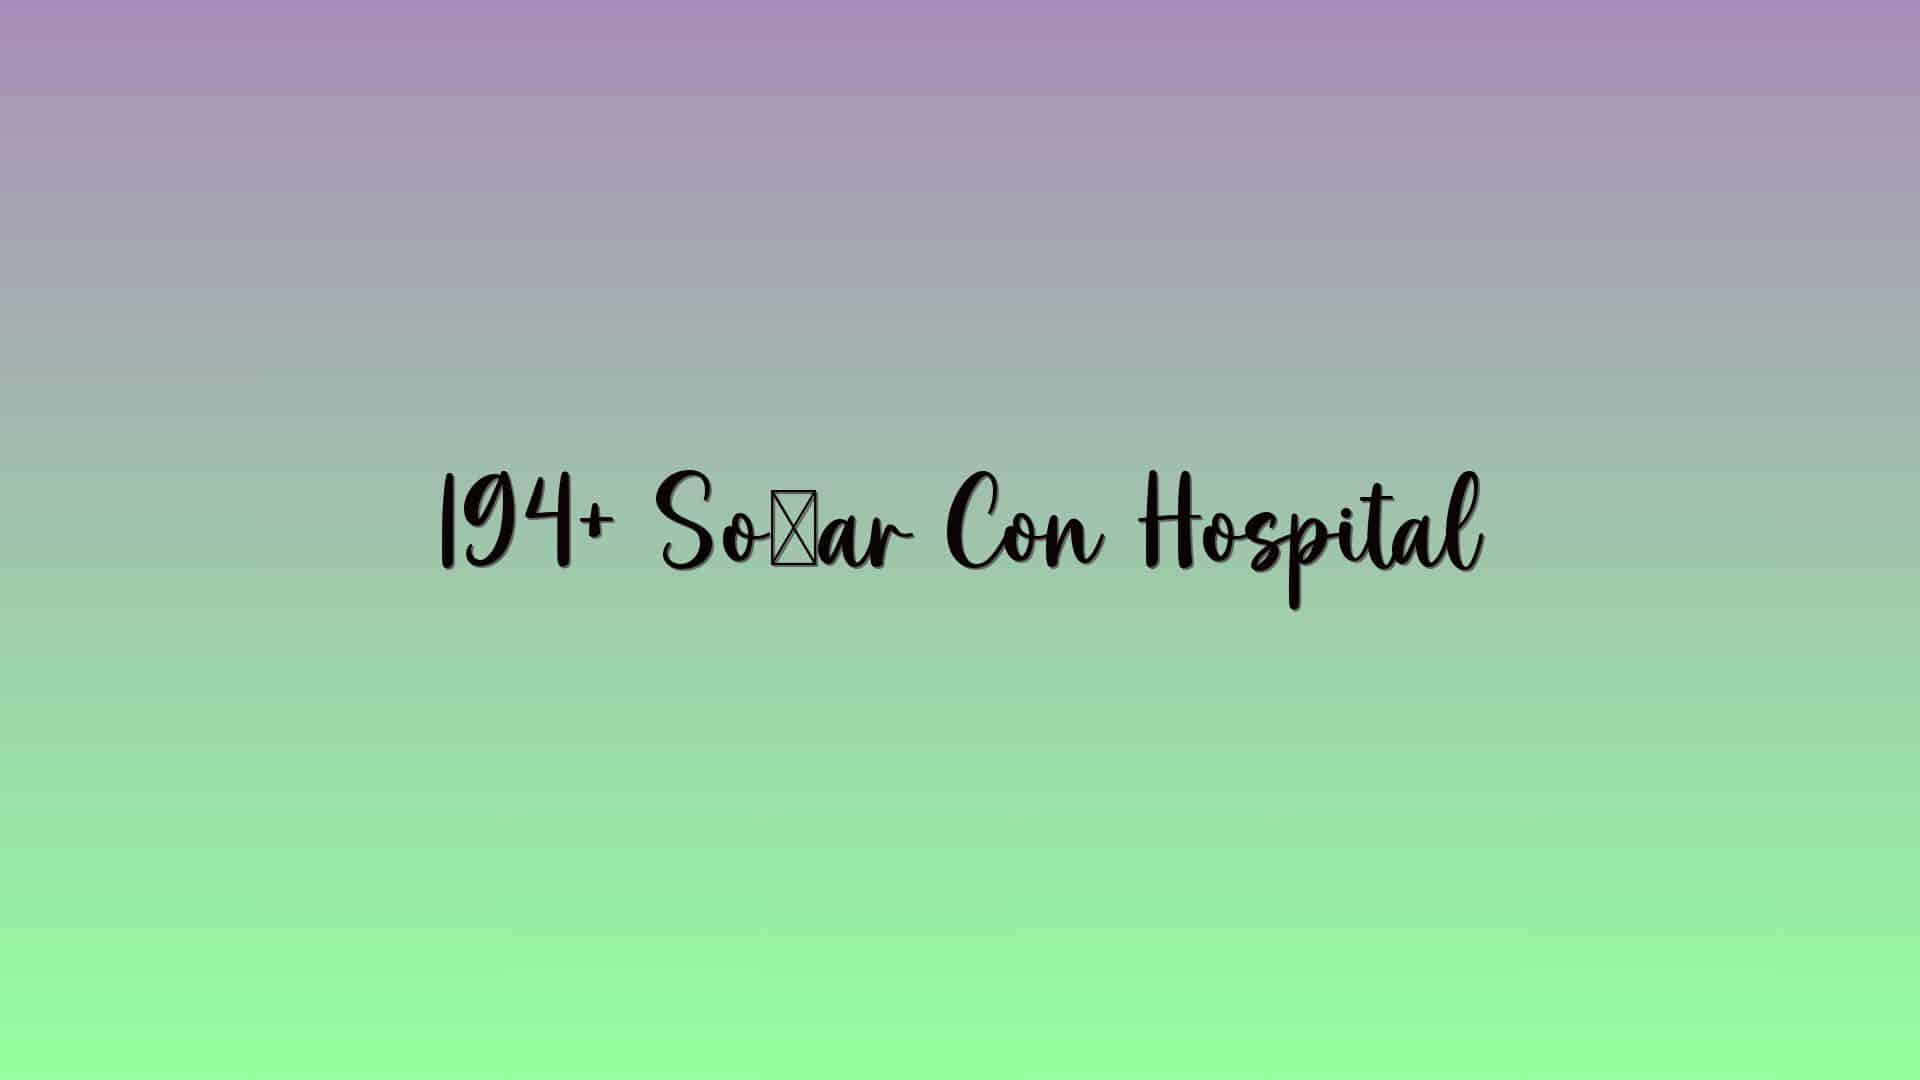 194+ Soñar Con Hospital